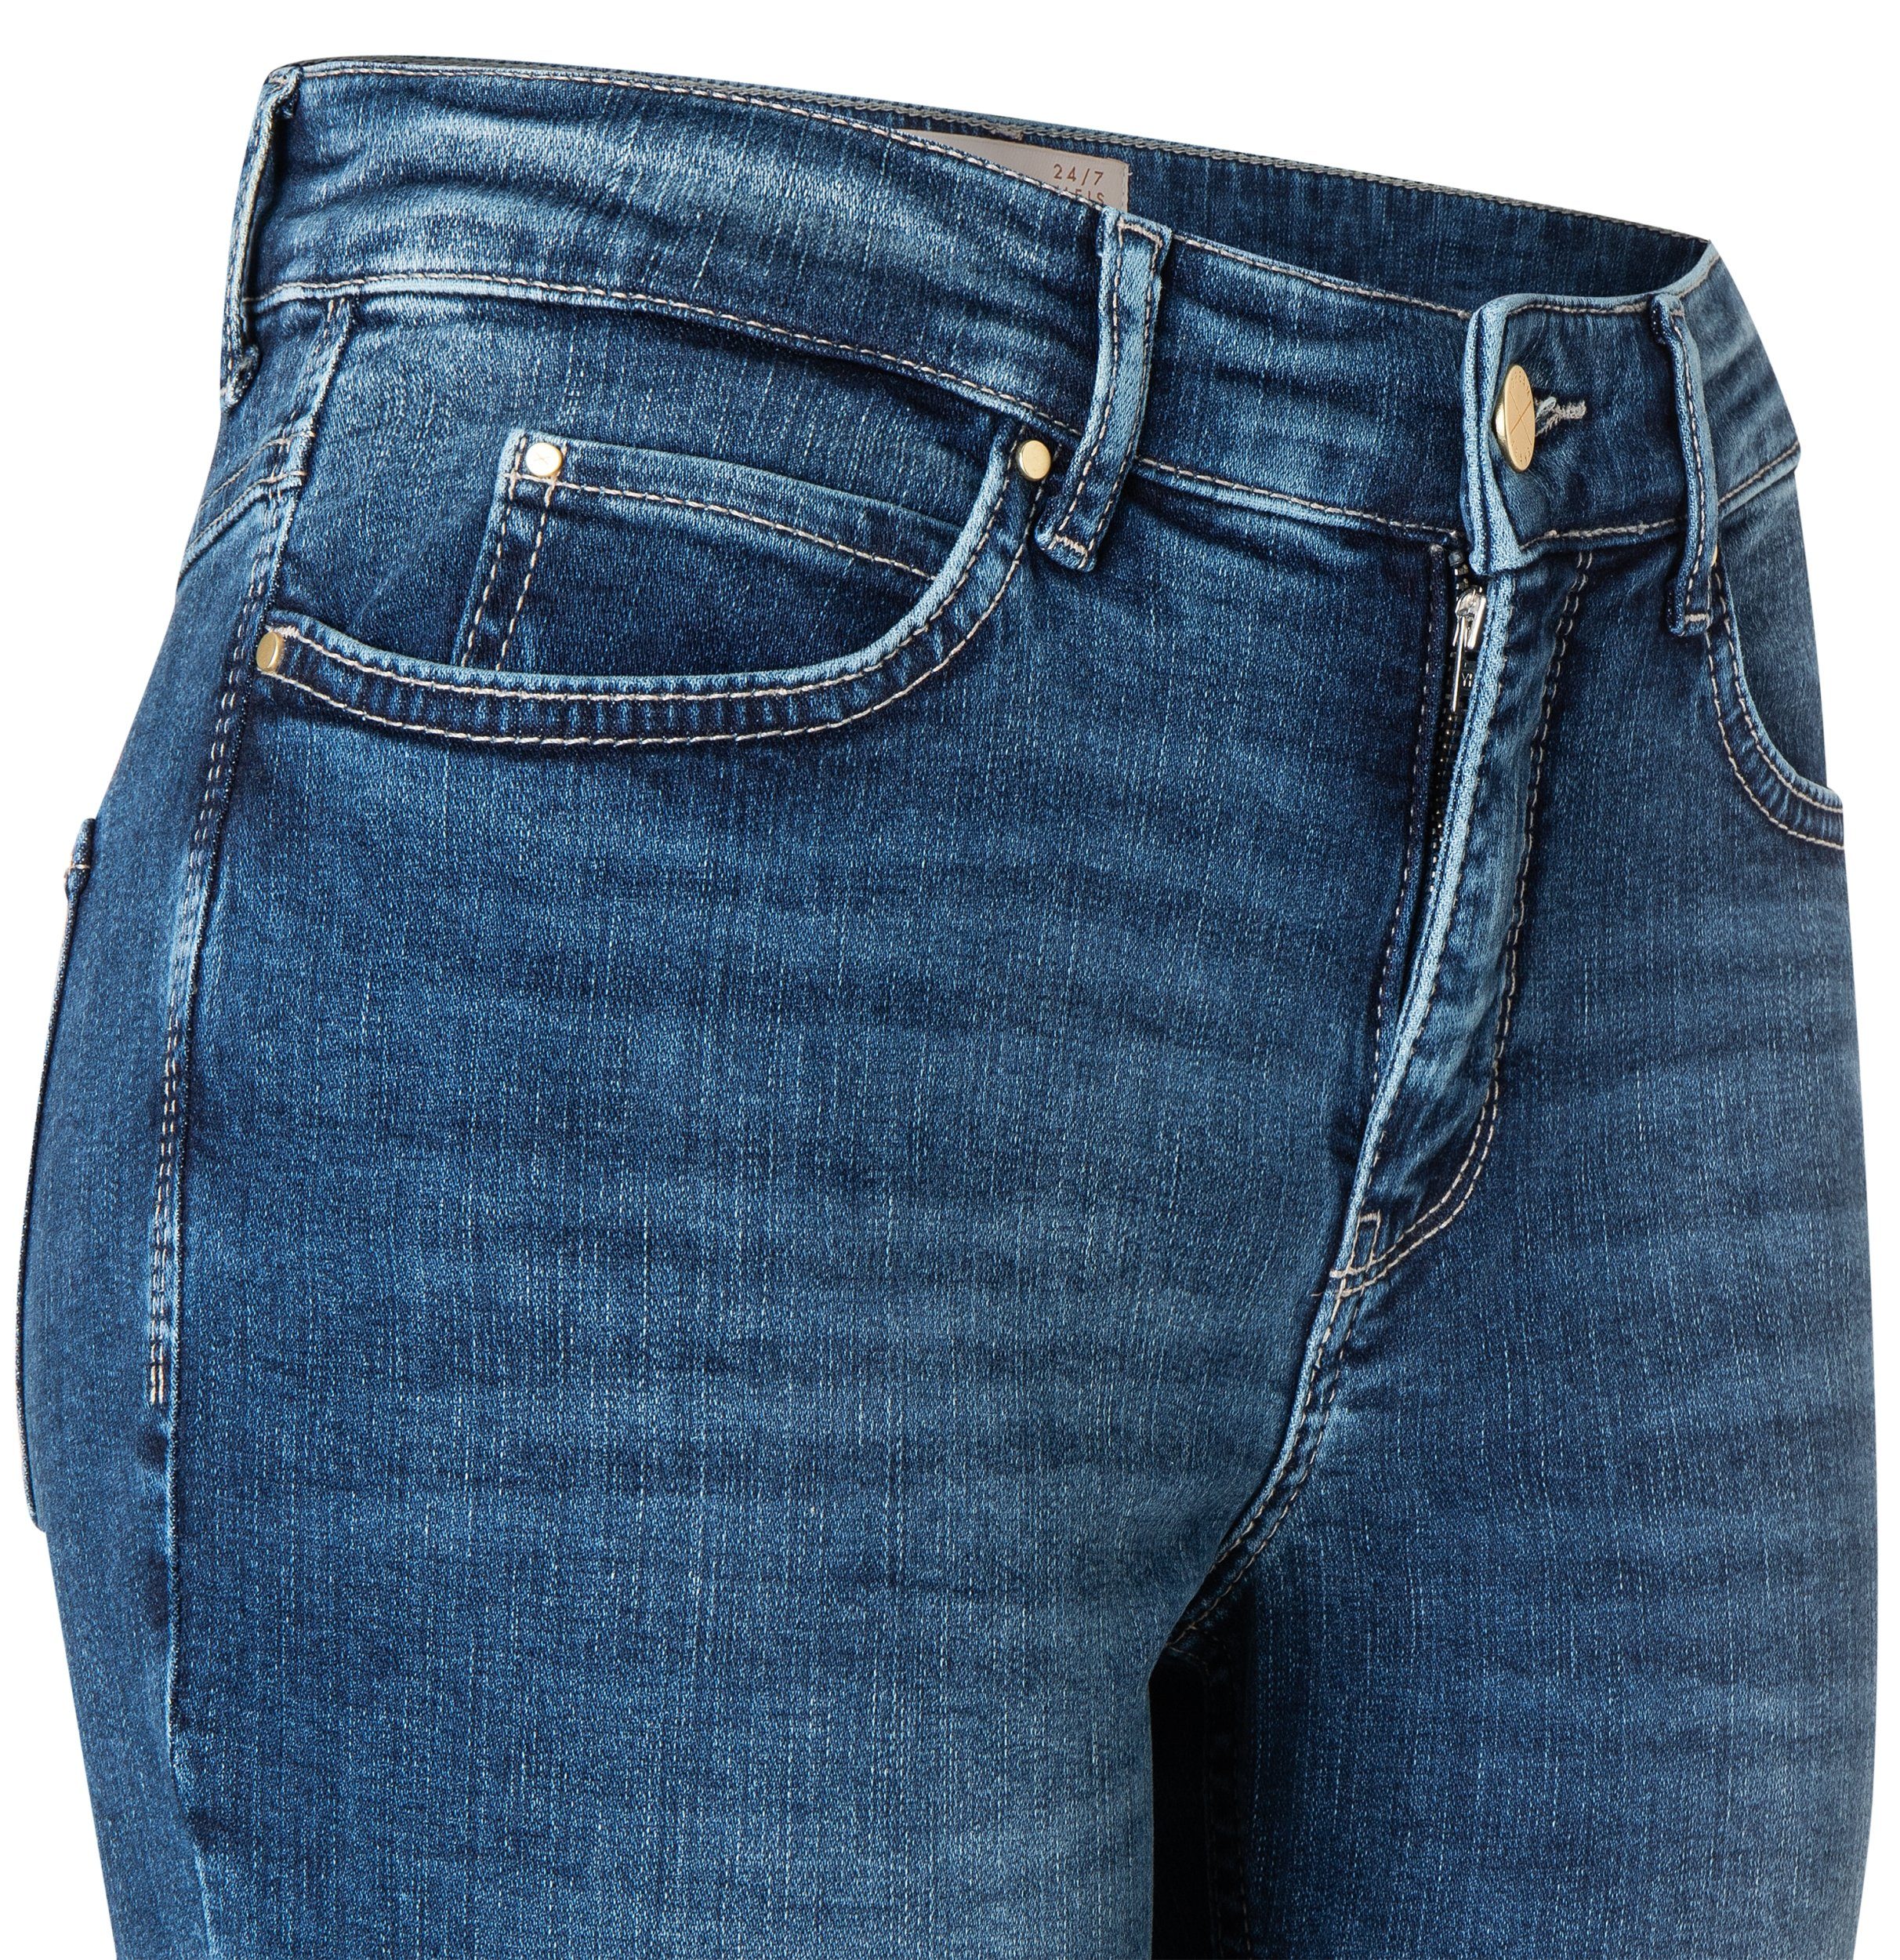 SKINNY, authentic JEANS Dream 5-Pocket-Jeans - DREAM MAC MAC Trousers Ladie